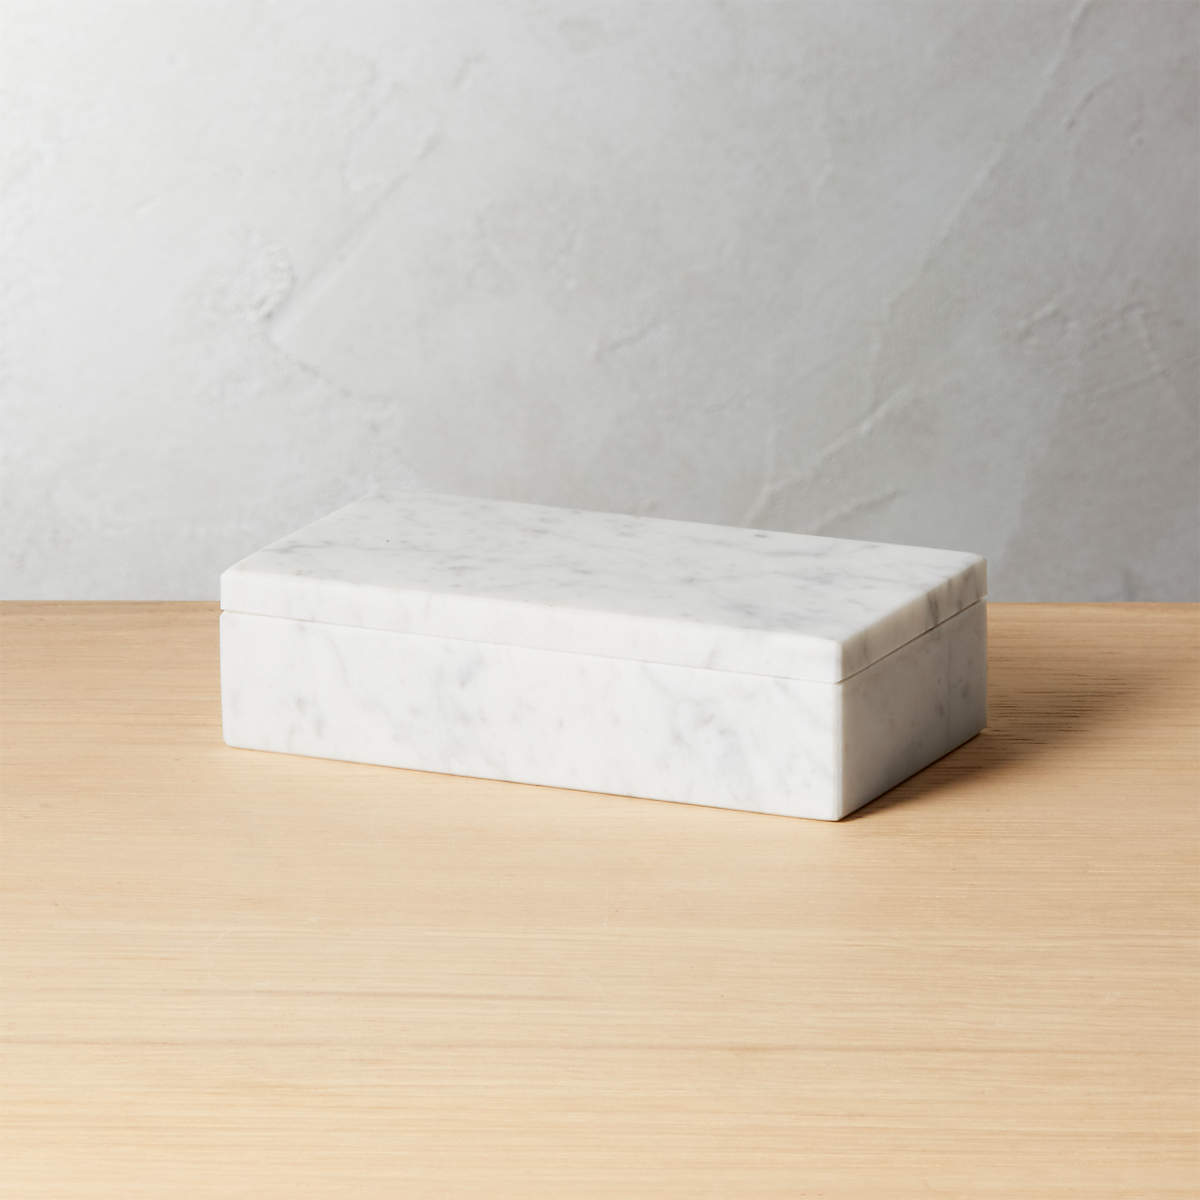 small-white-marble-box.jpg